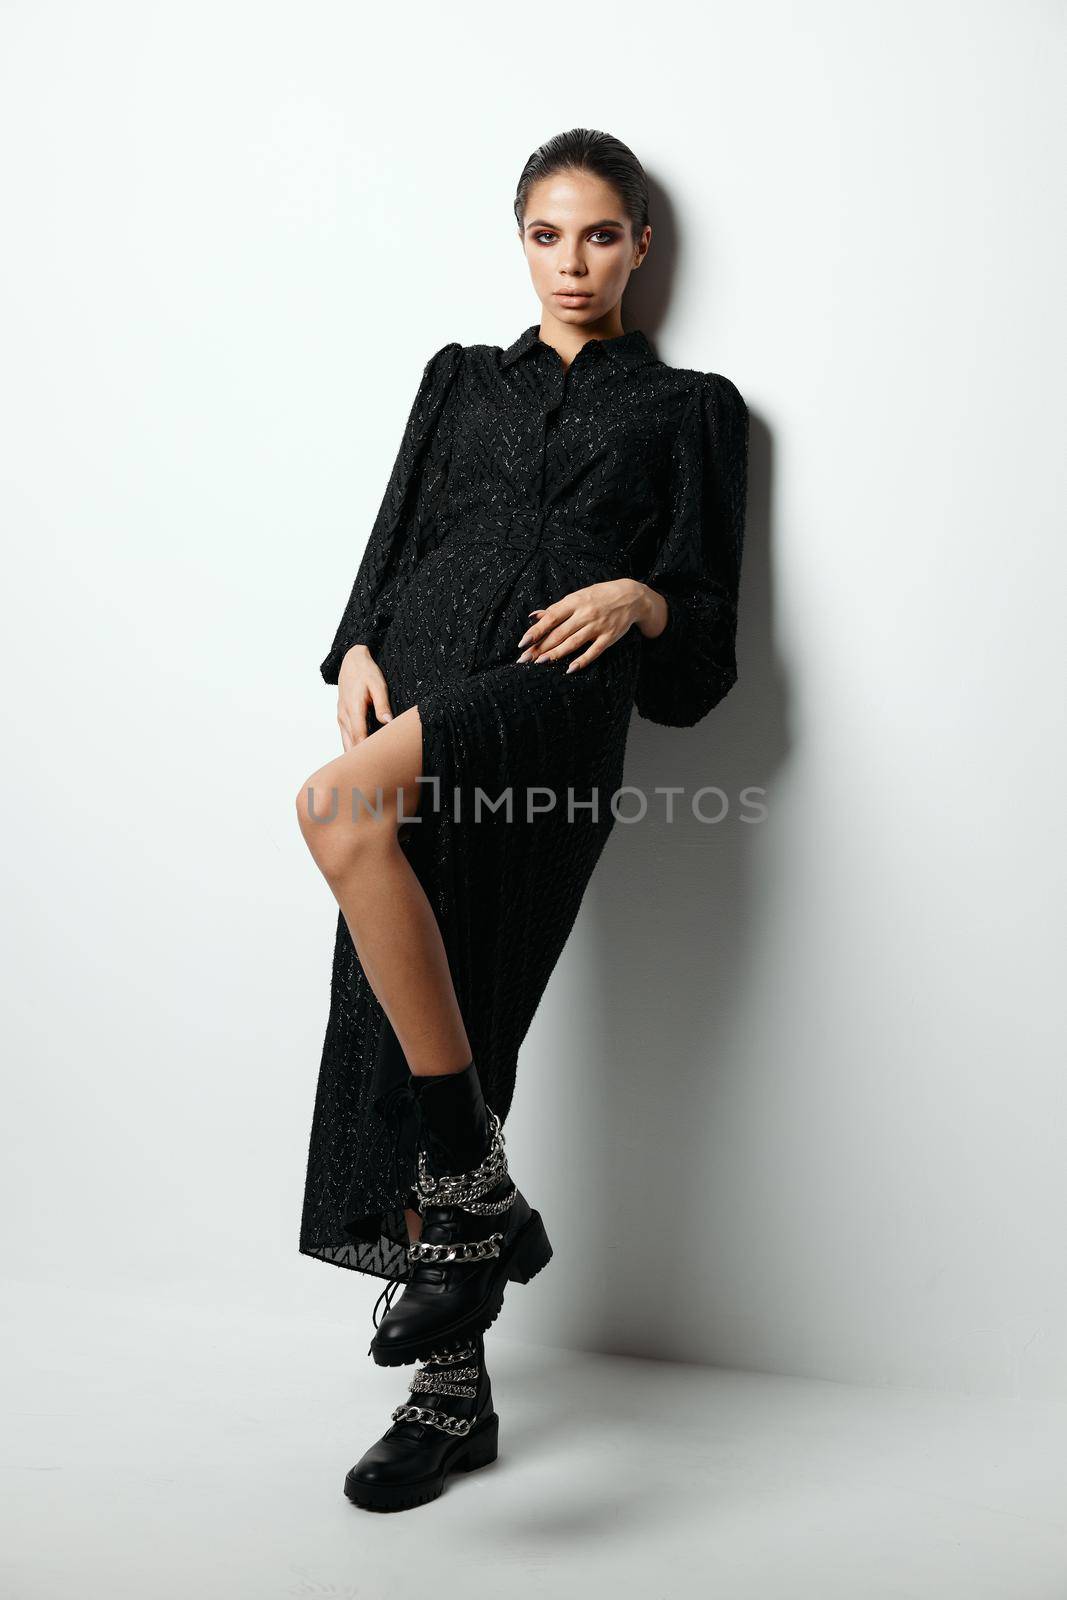 brunette bright makeup fashion modern style black dress. High quality photo